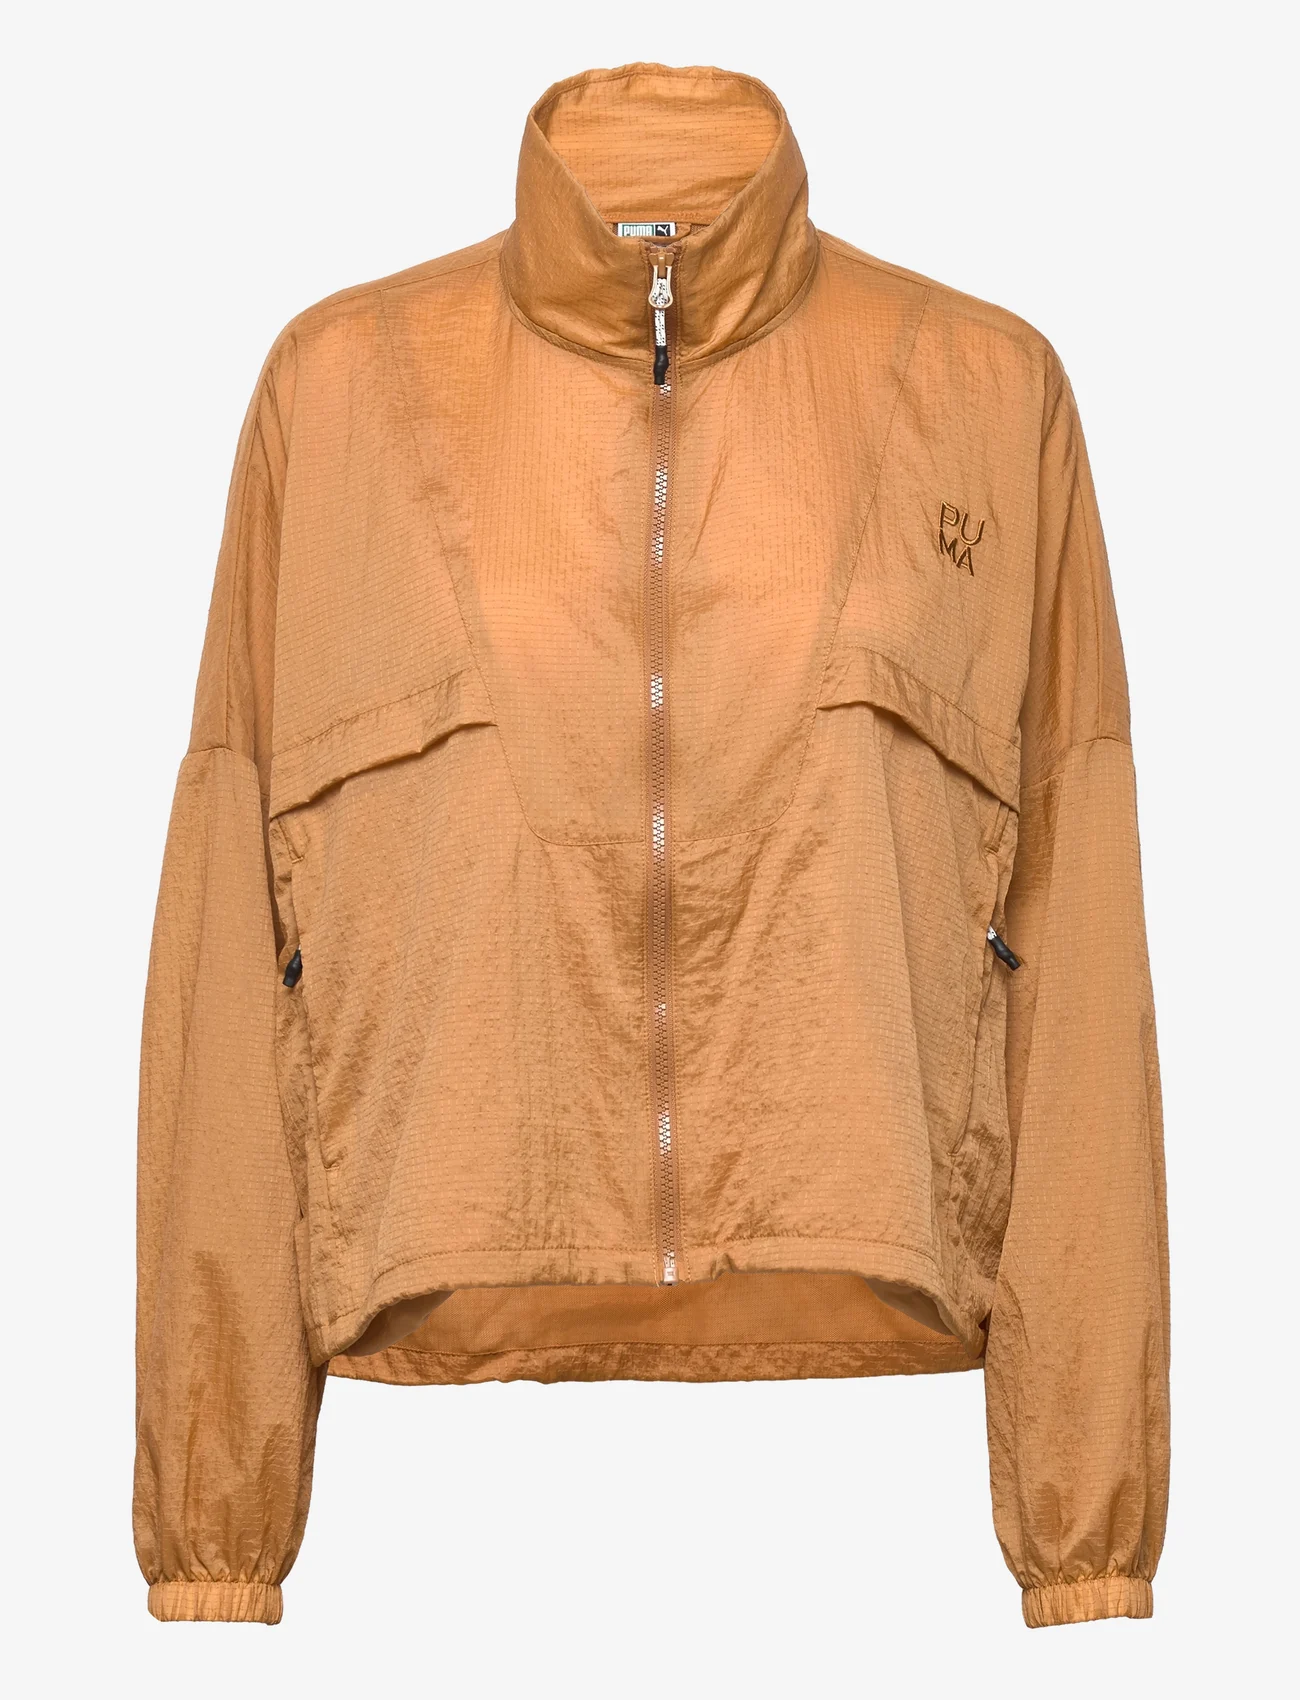 PUMA - Infuse Woven Track Jacket - sports jackets - desert tan - 0